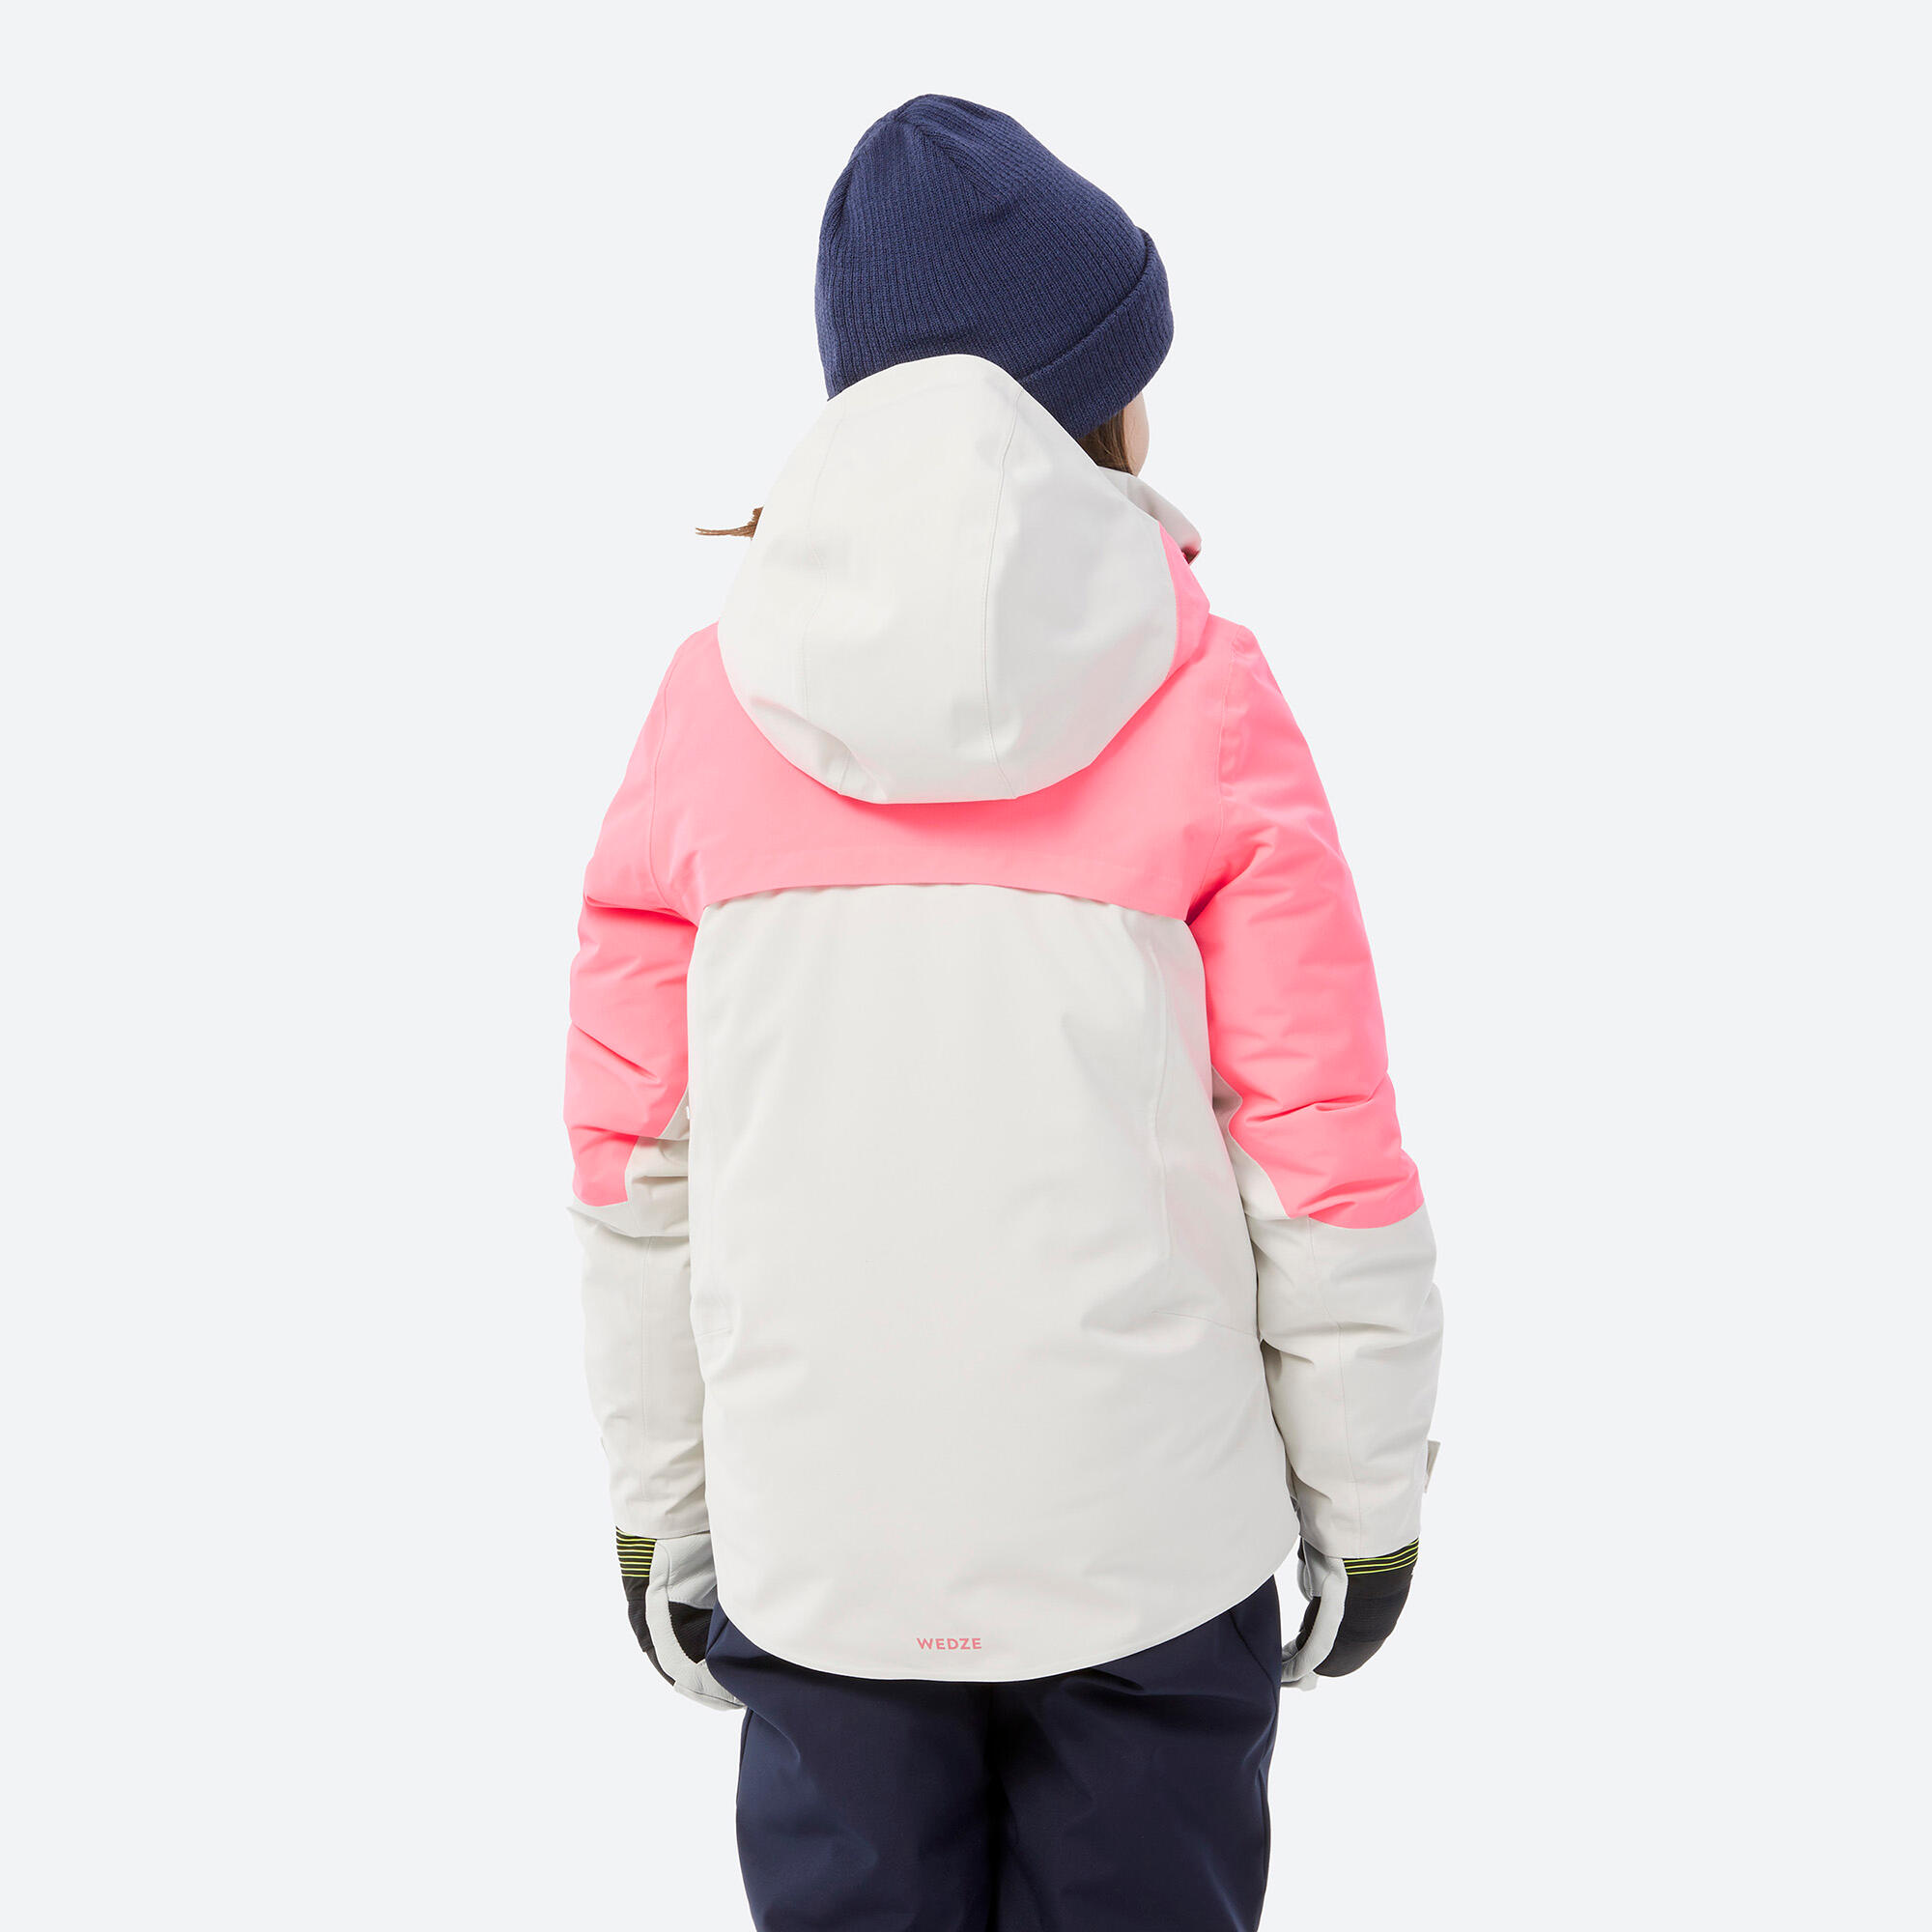 Kids’ warm and waterproof ski jacket 900 - White and pink 6/12